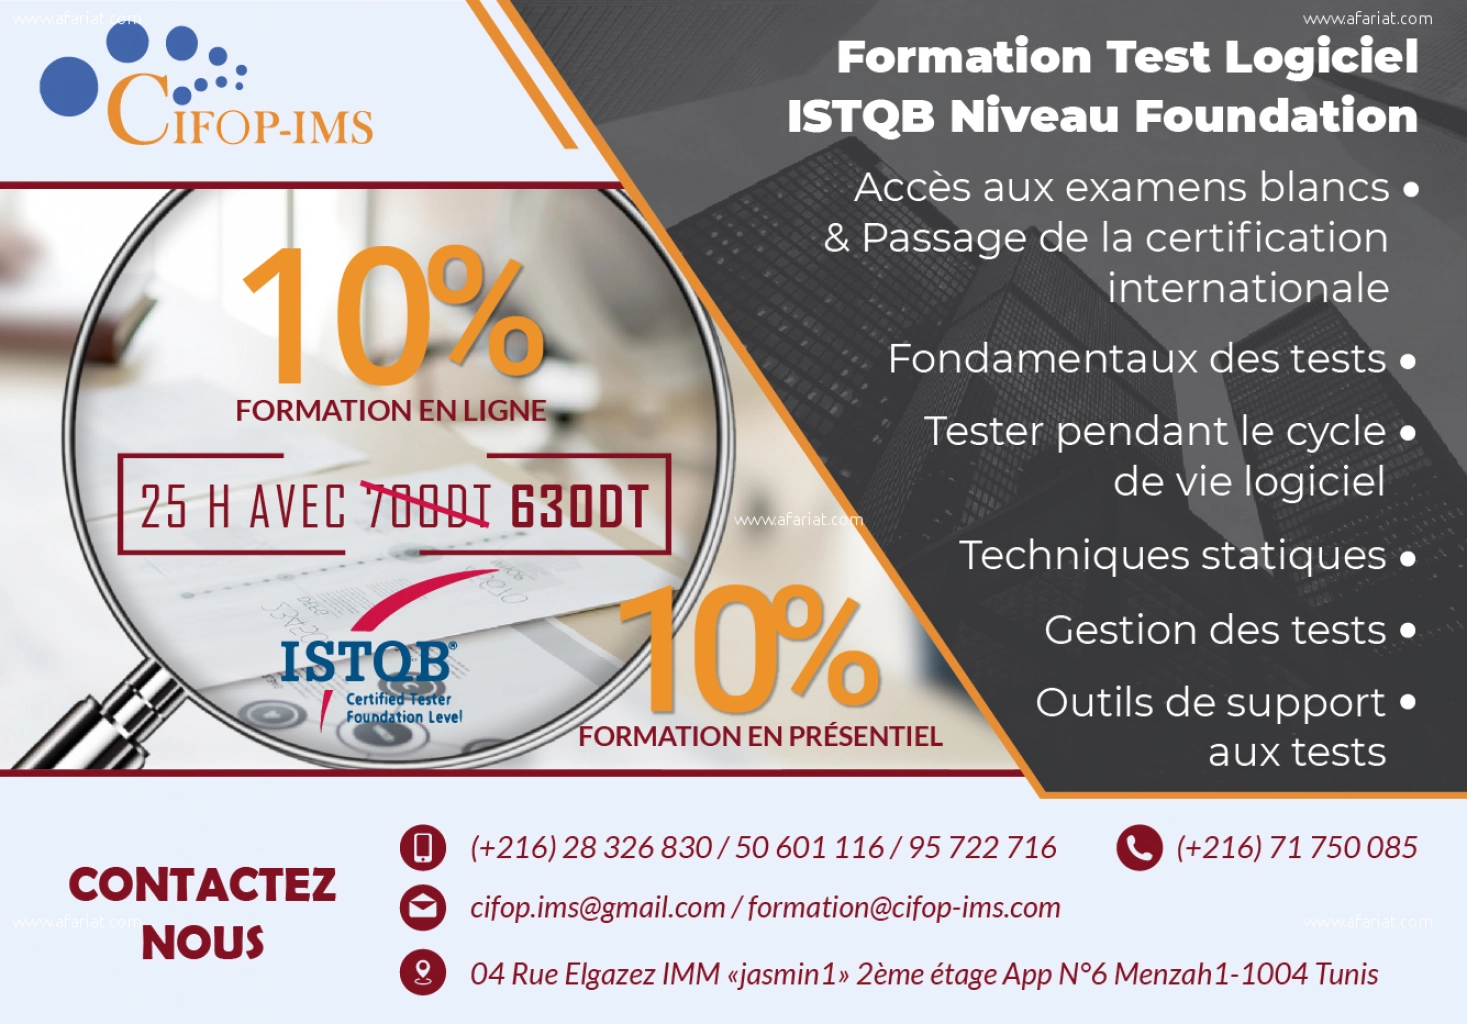 Formation test logiciel _ ISTQB